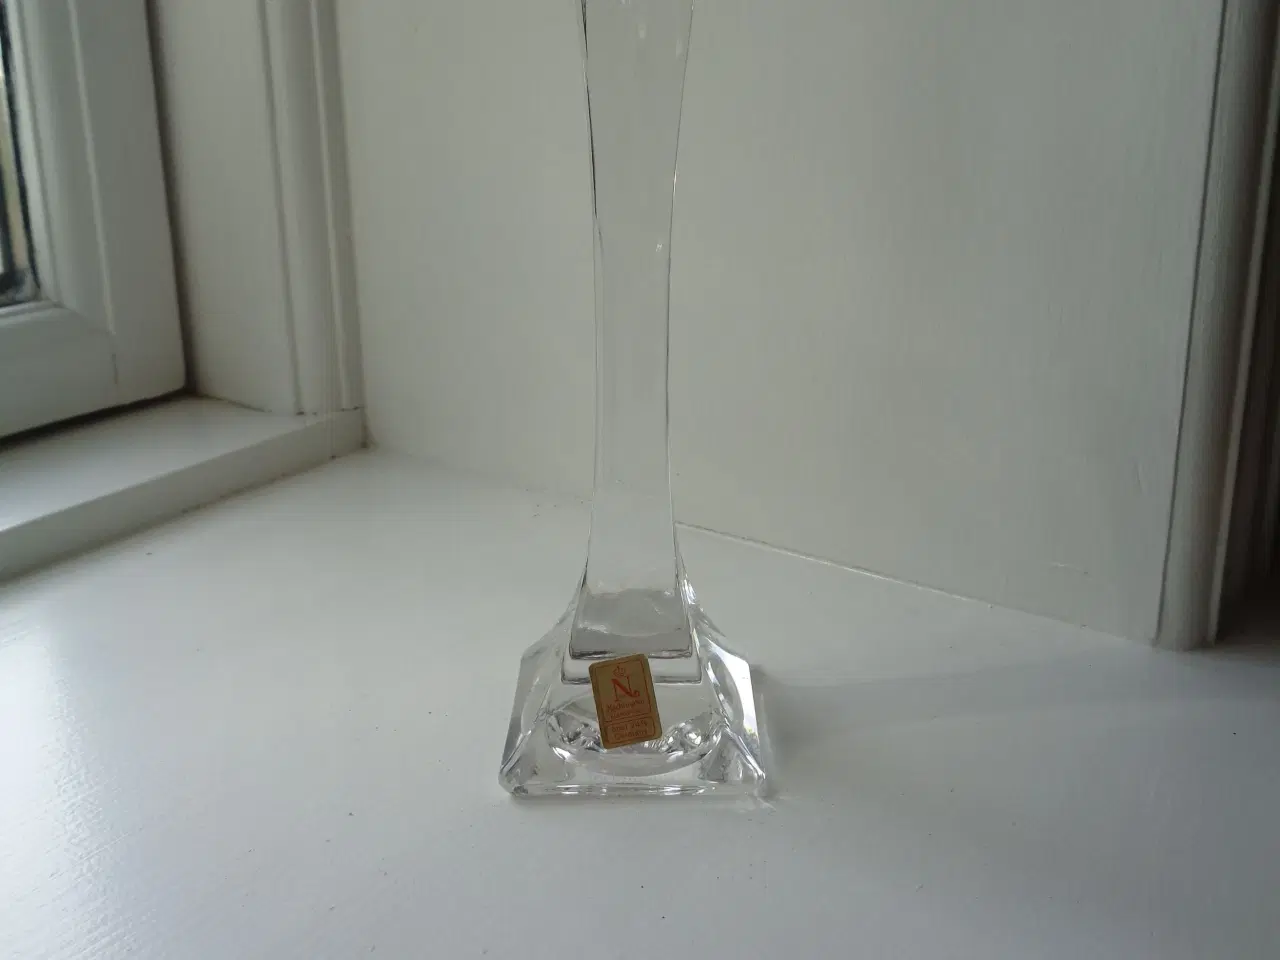 Billede 2 - Krystal lysestage